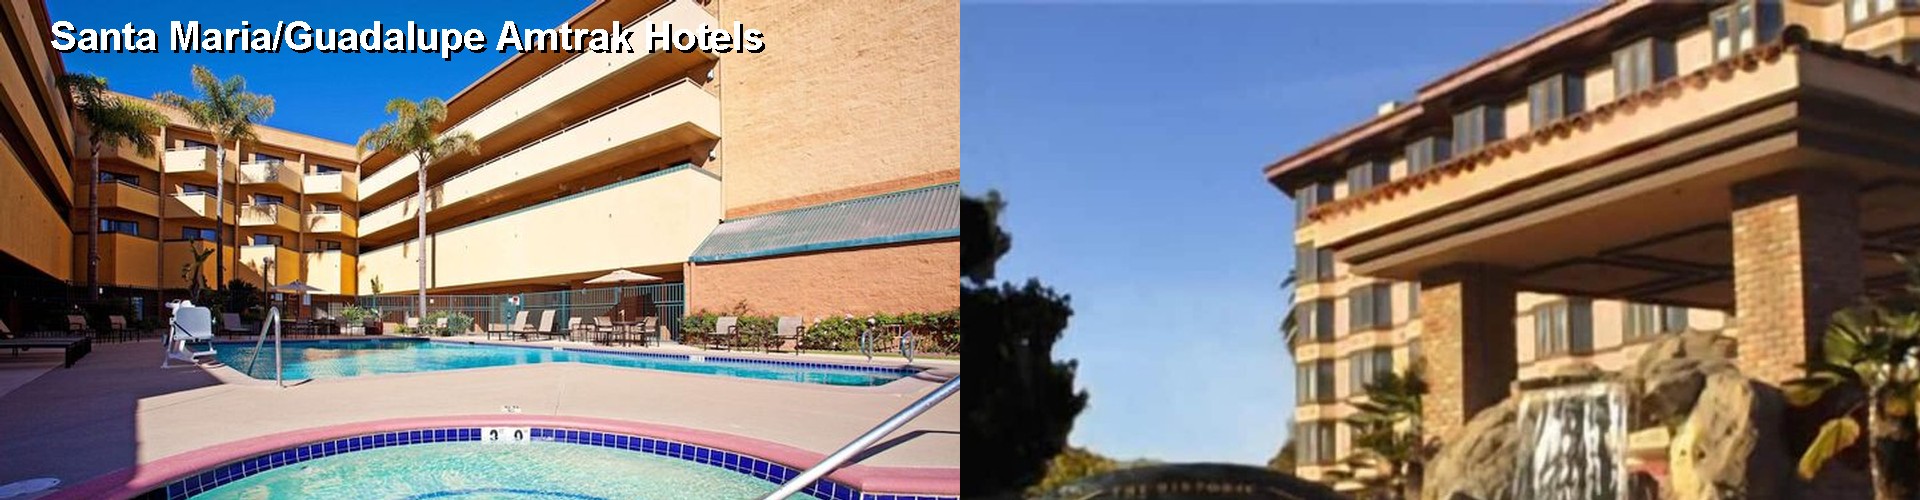 5 Best Hotels near Santa Maria/Guadalupe Amtrak